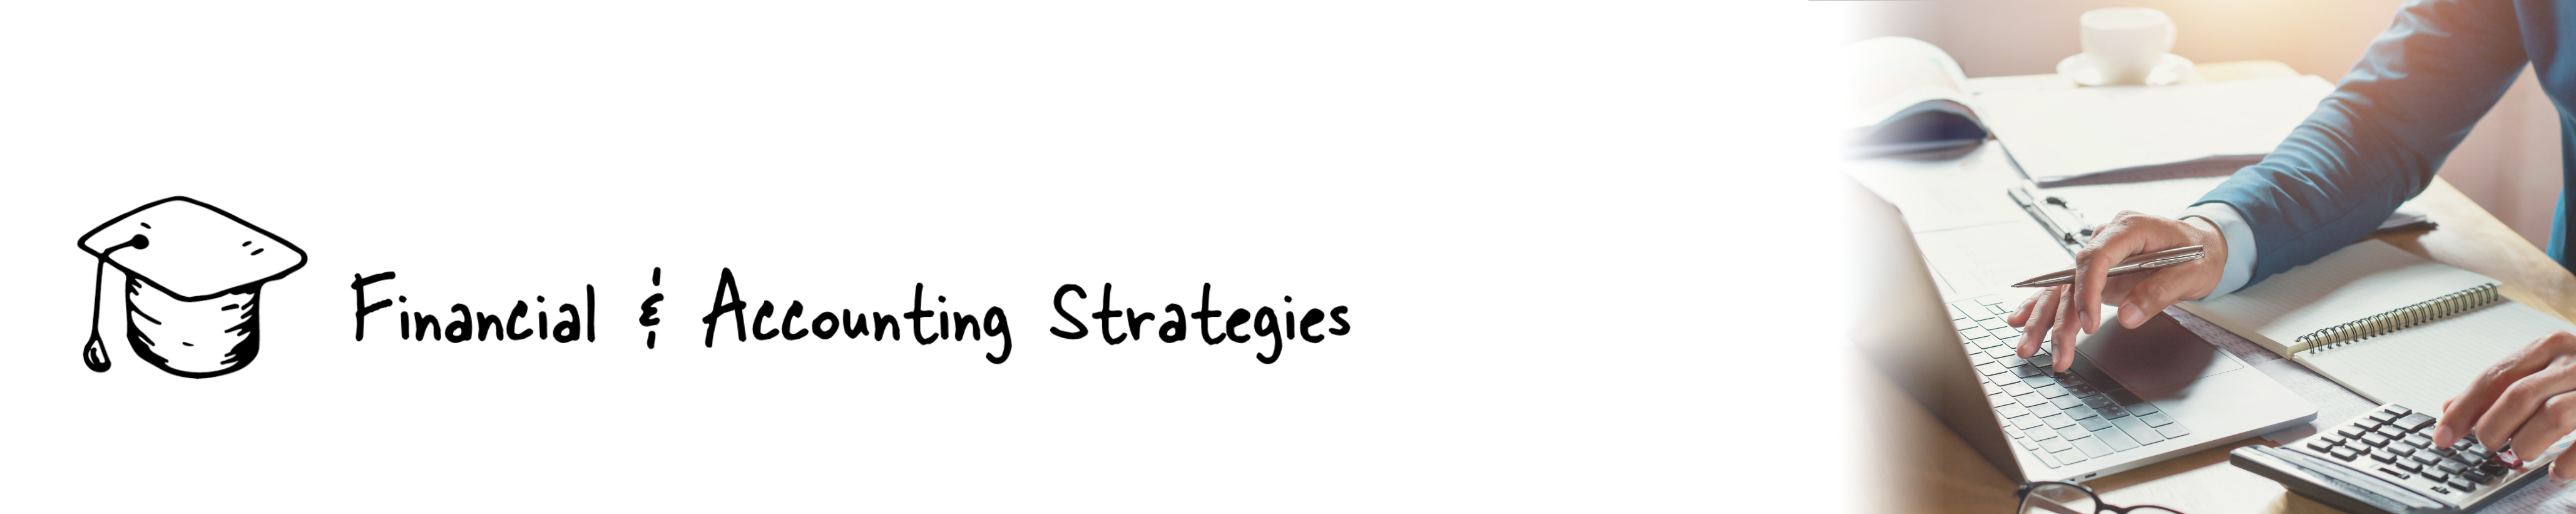 Financial & Accounting Strategies